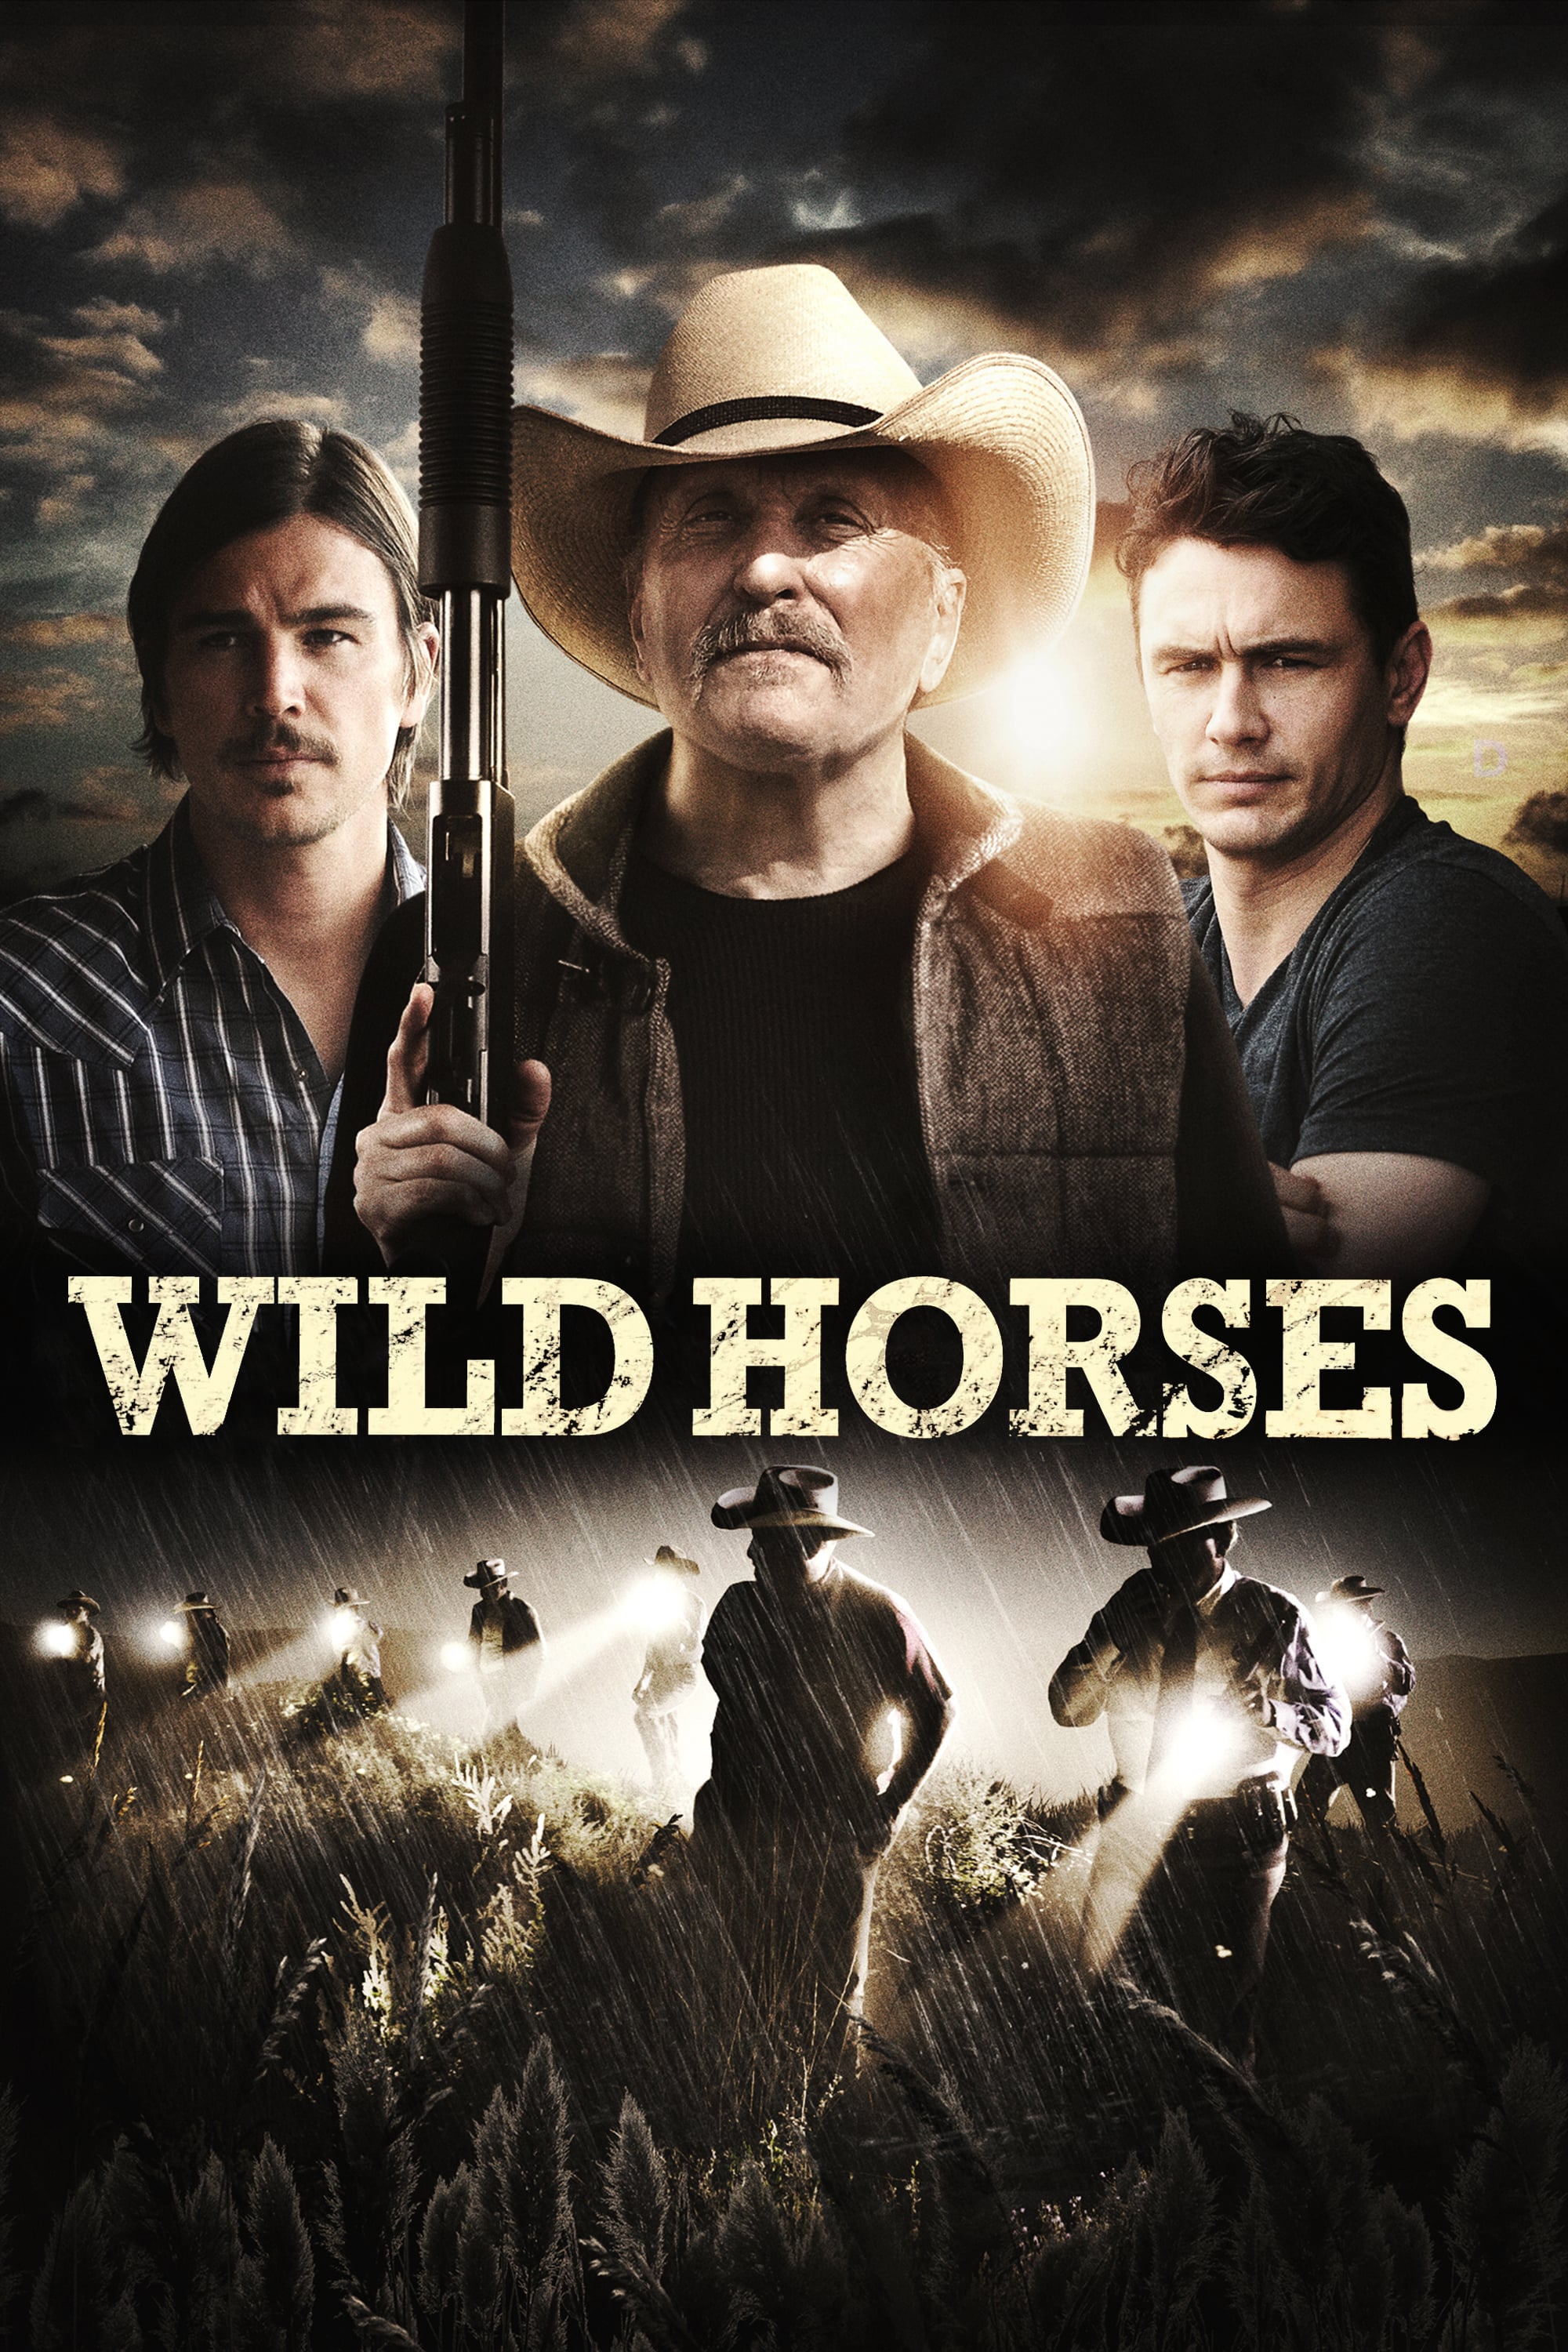 Plakat von "Wild Horses"